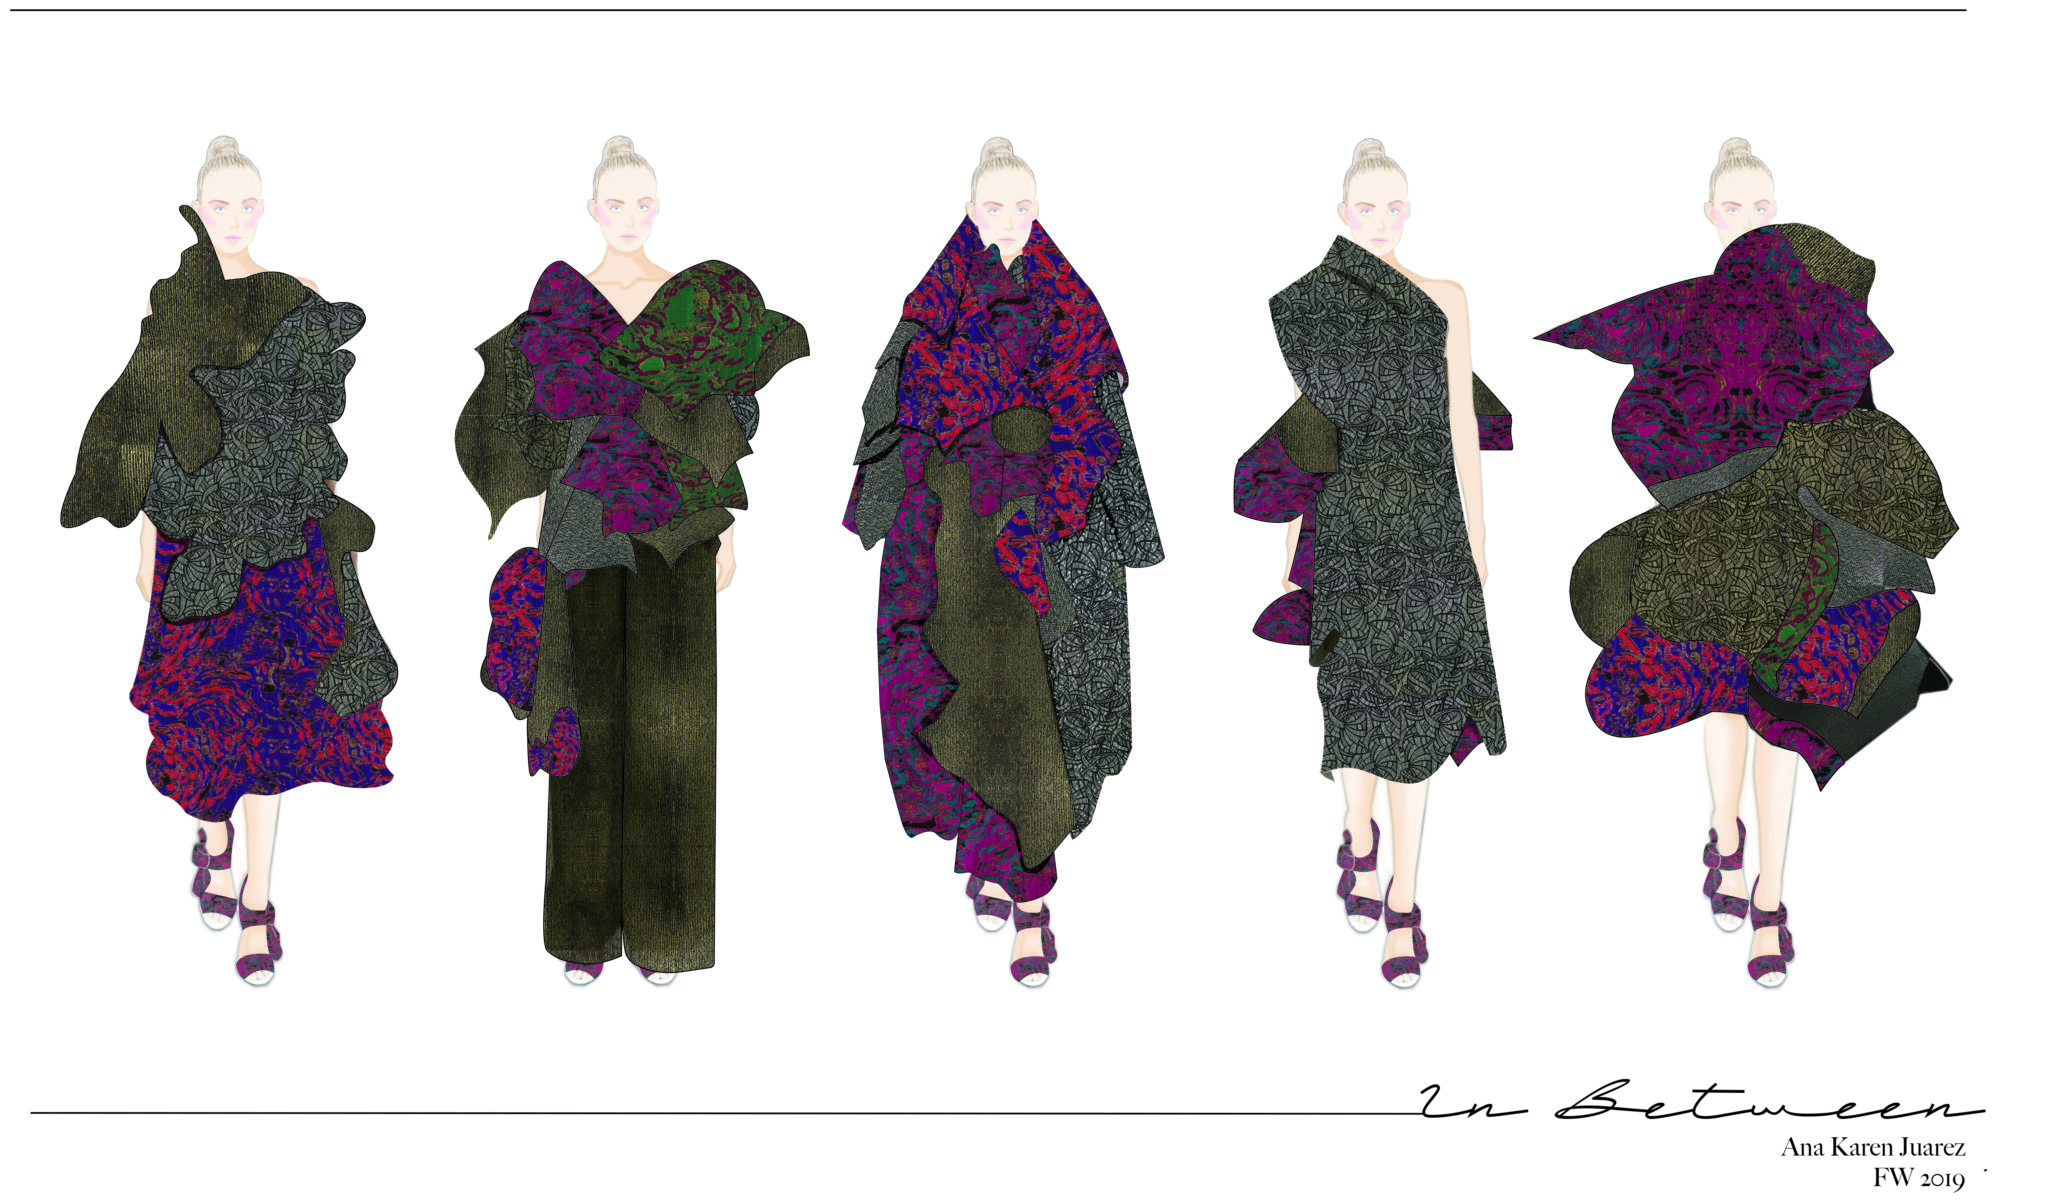 Five billowing outfits shaped like flowers by Ana Karen Juarez Ibarra